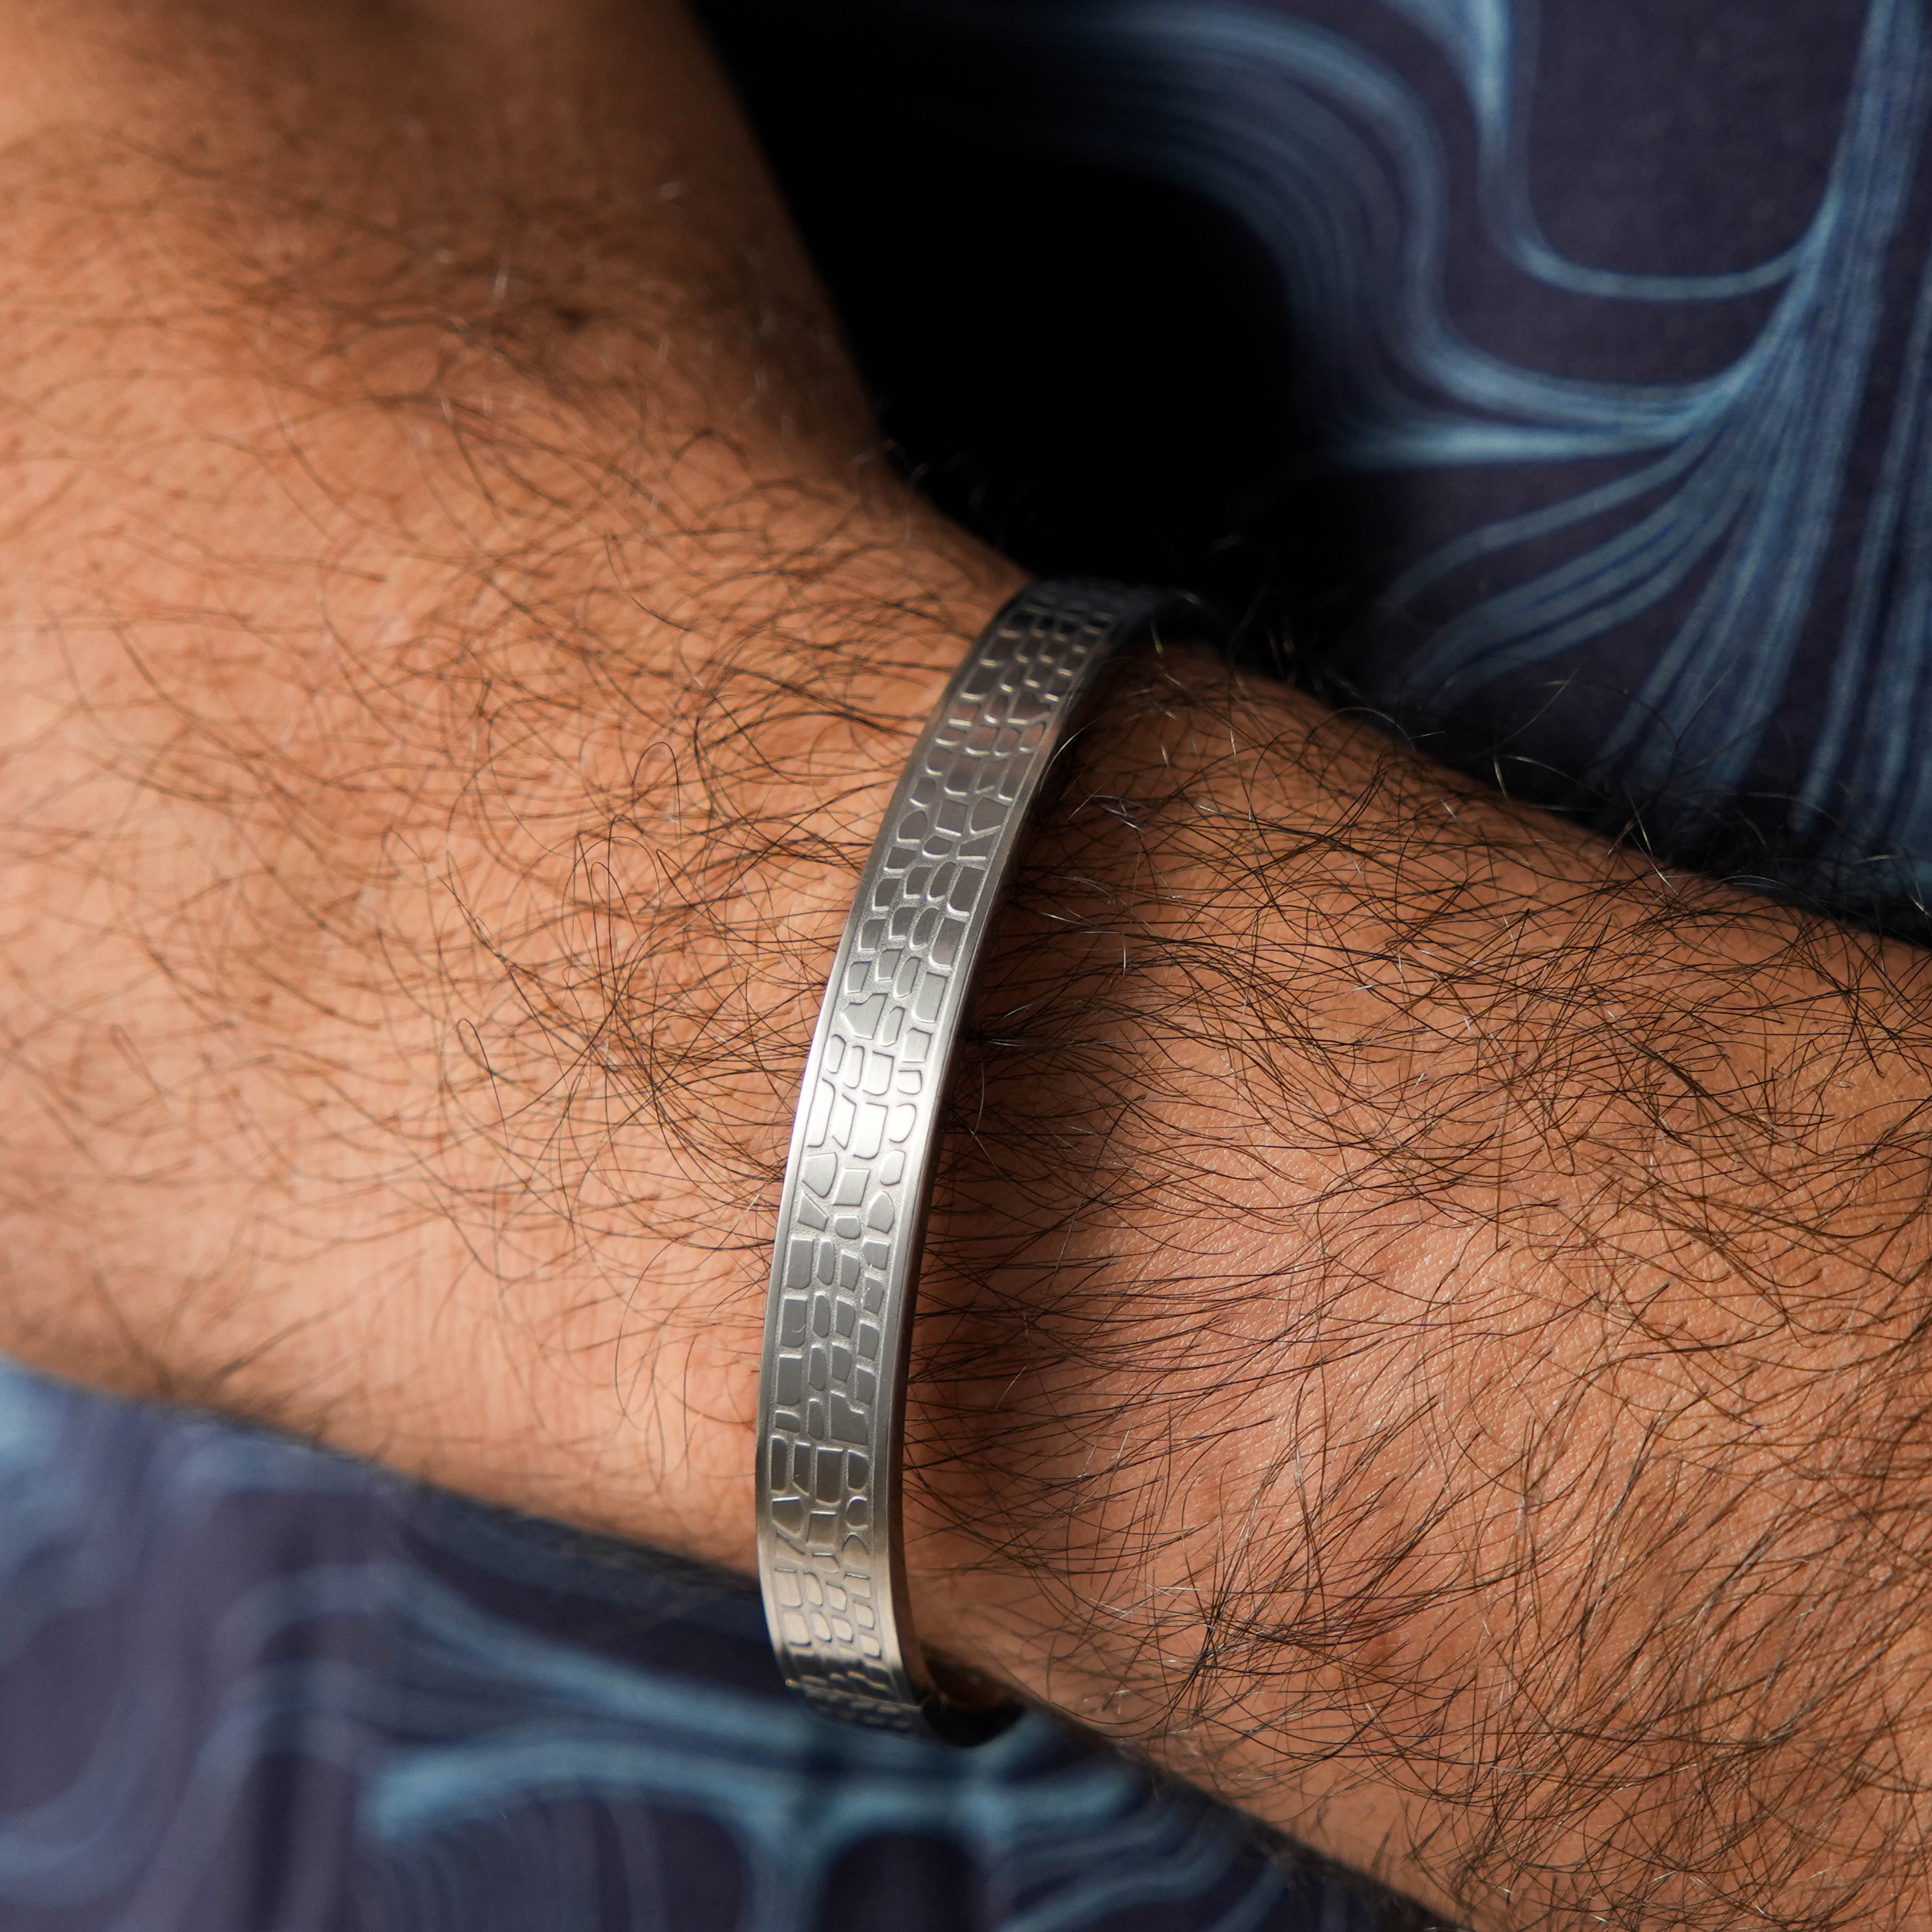 Buy Men's Bracelets Online | 25+ Bracelet designs for Men – Drip Project